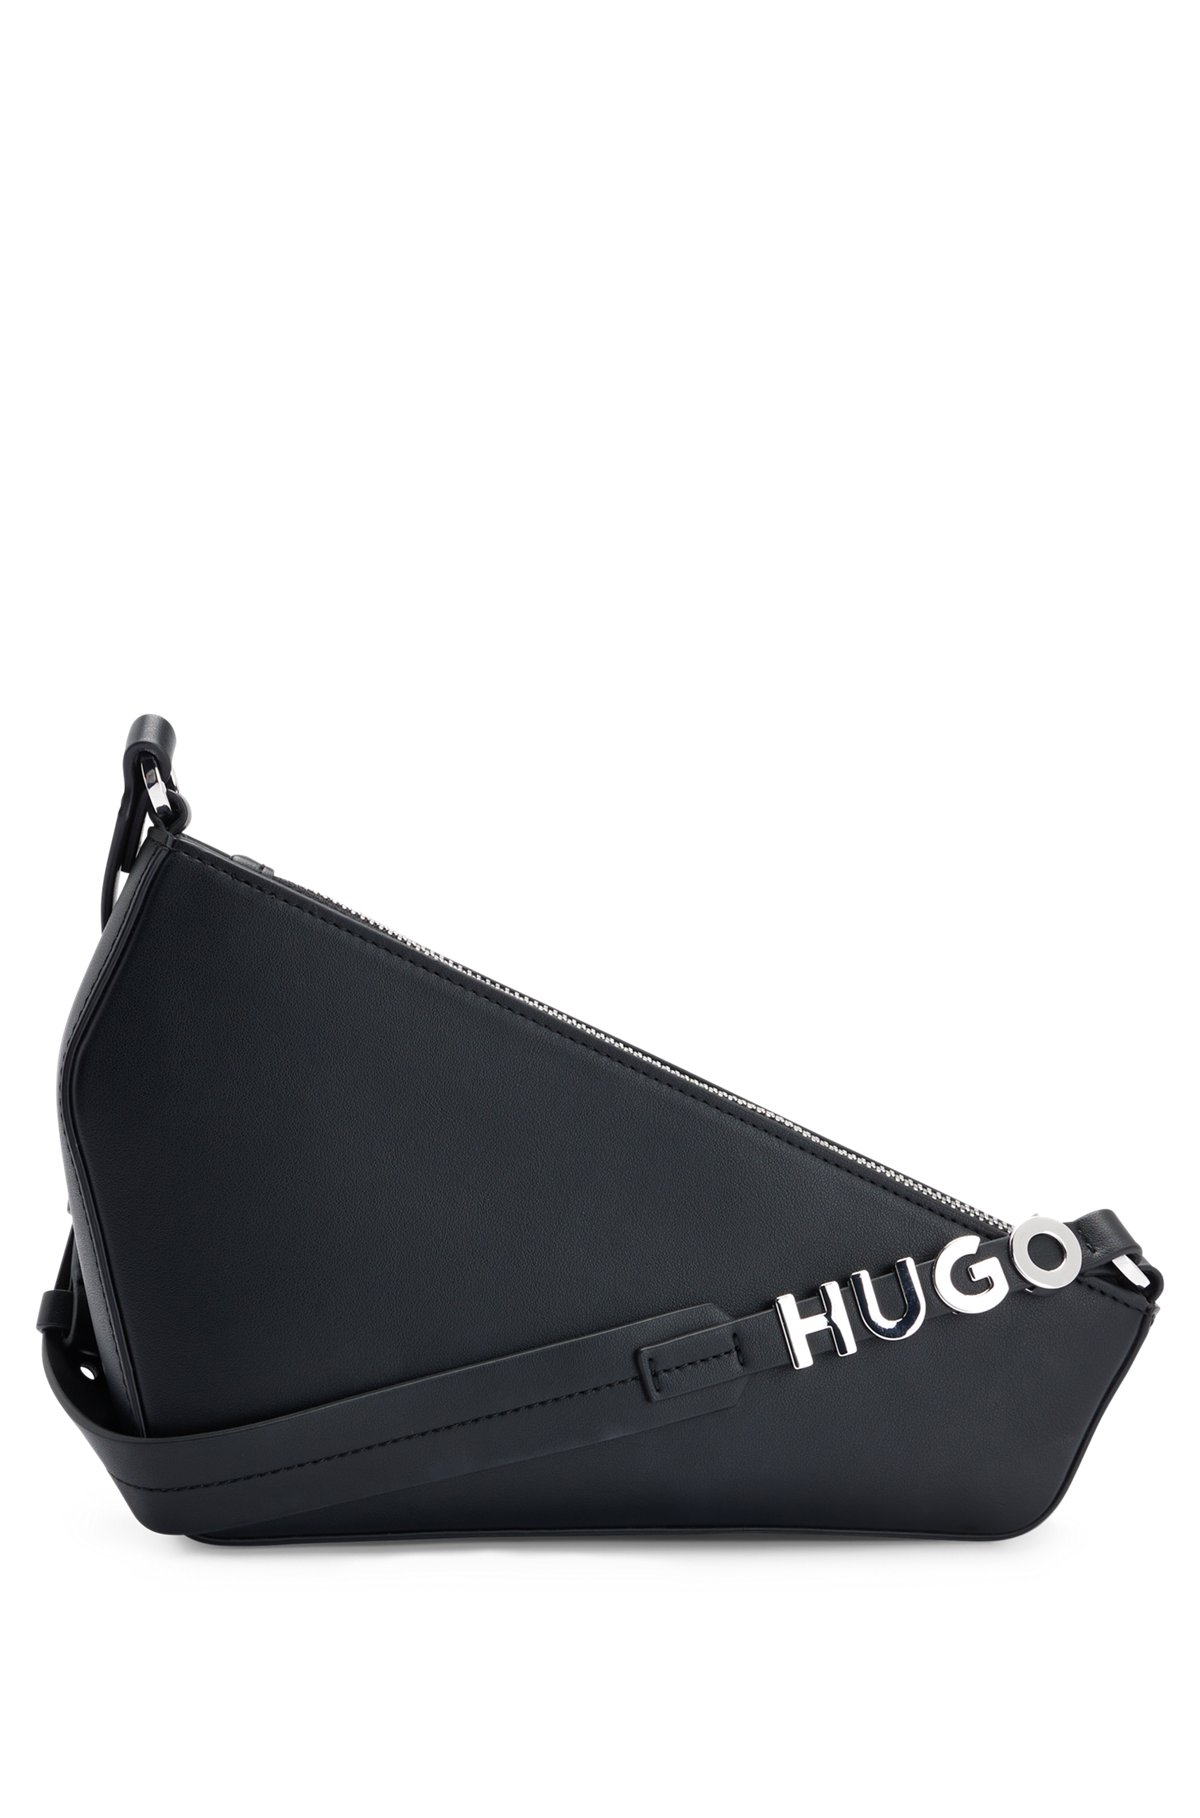 HUGO - Asymmetric shoulder bag in faux leather with metallic logo